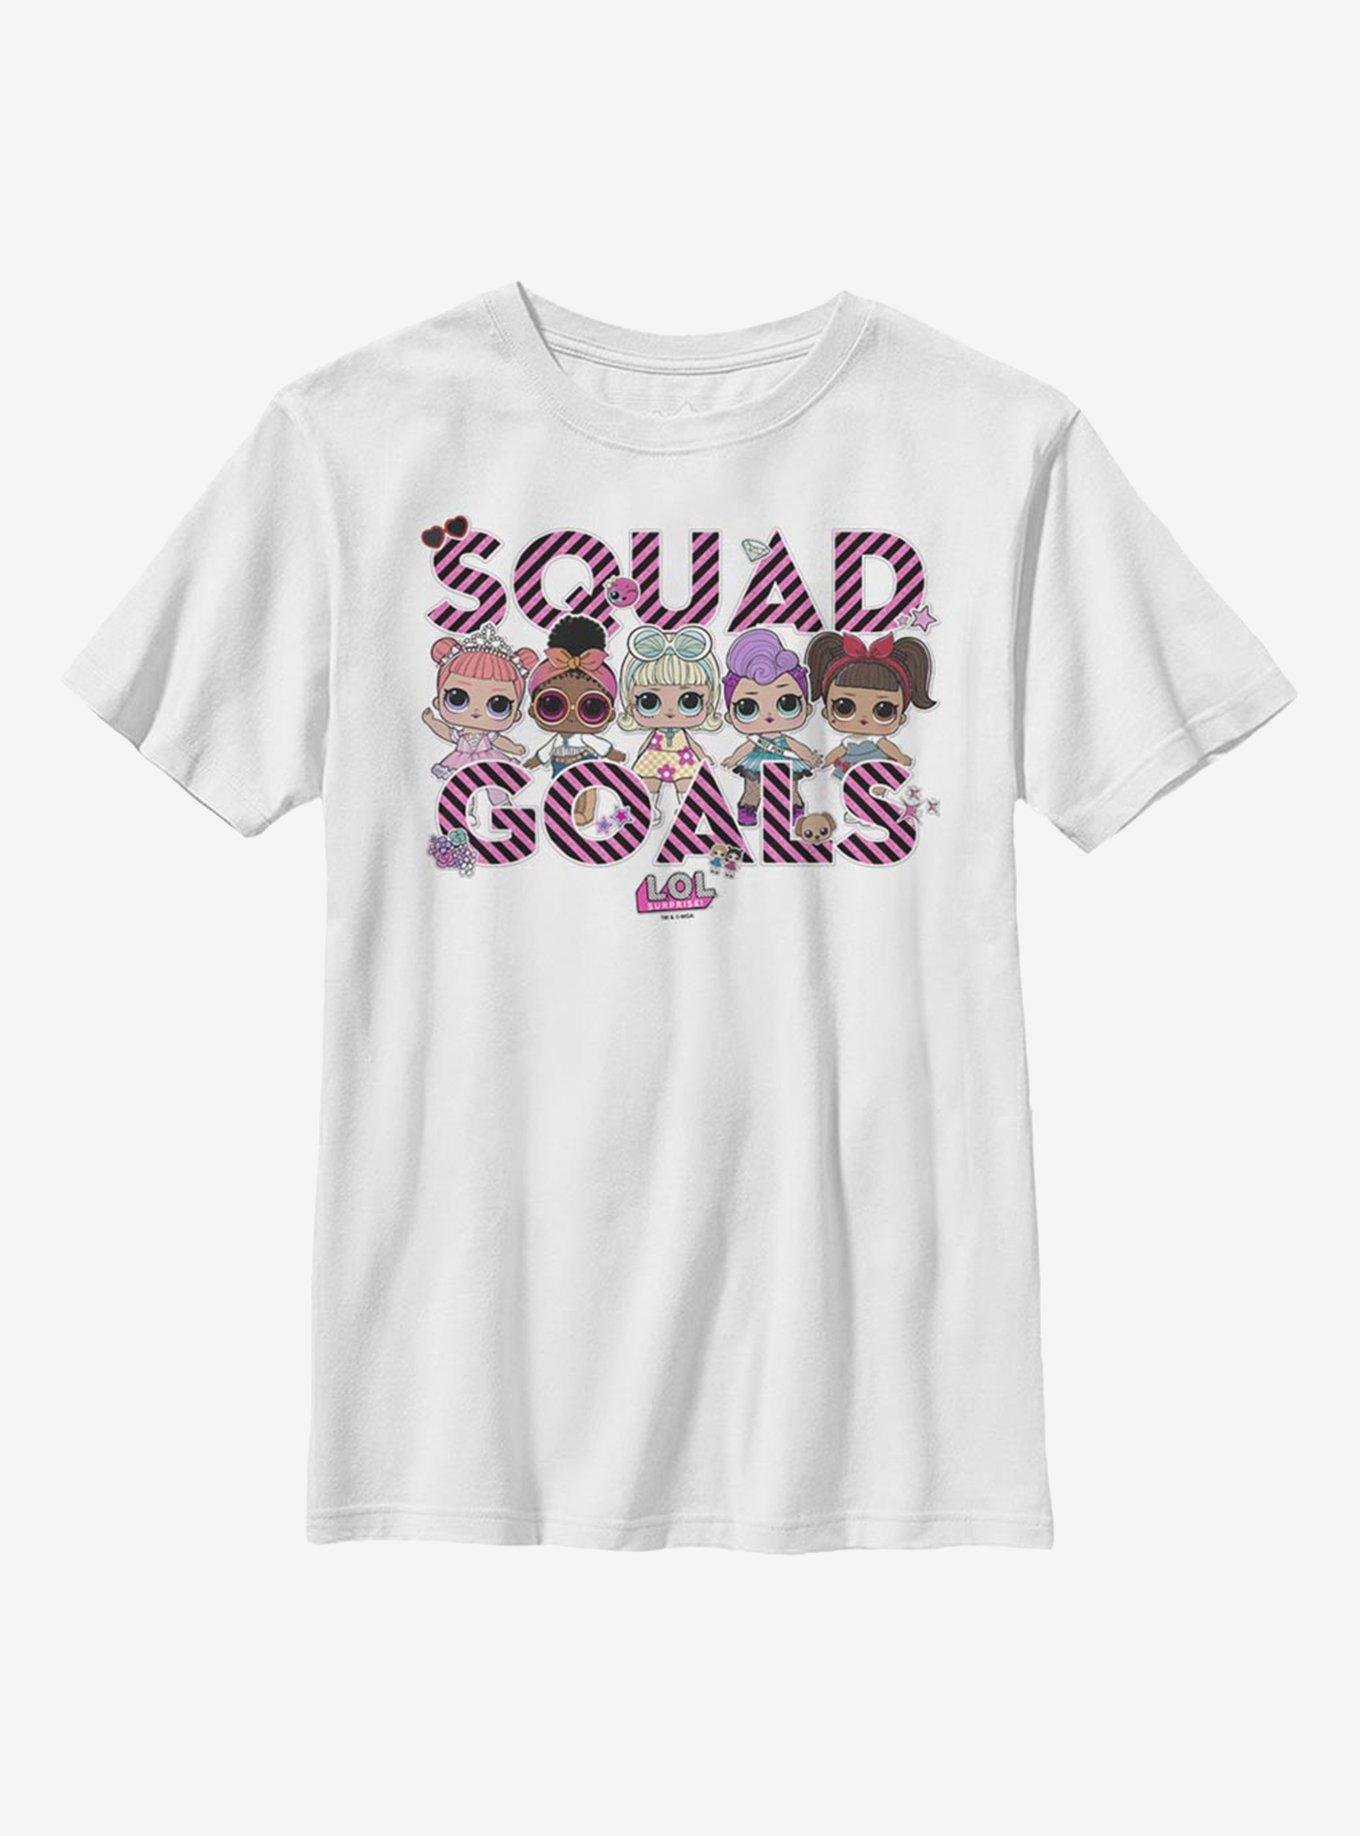 L.O.L. Surprise! LOL Squad Goals Youth T-Shirt, WHITE, hi-res